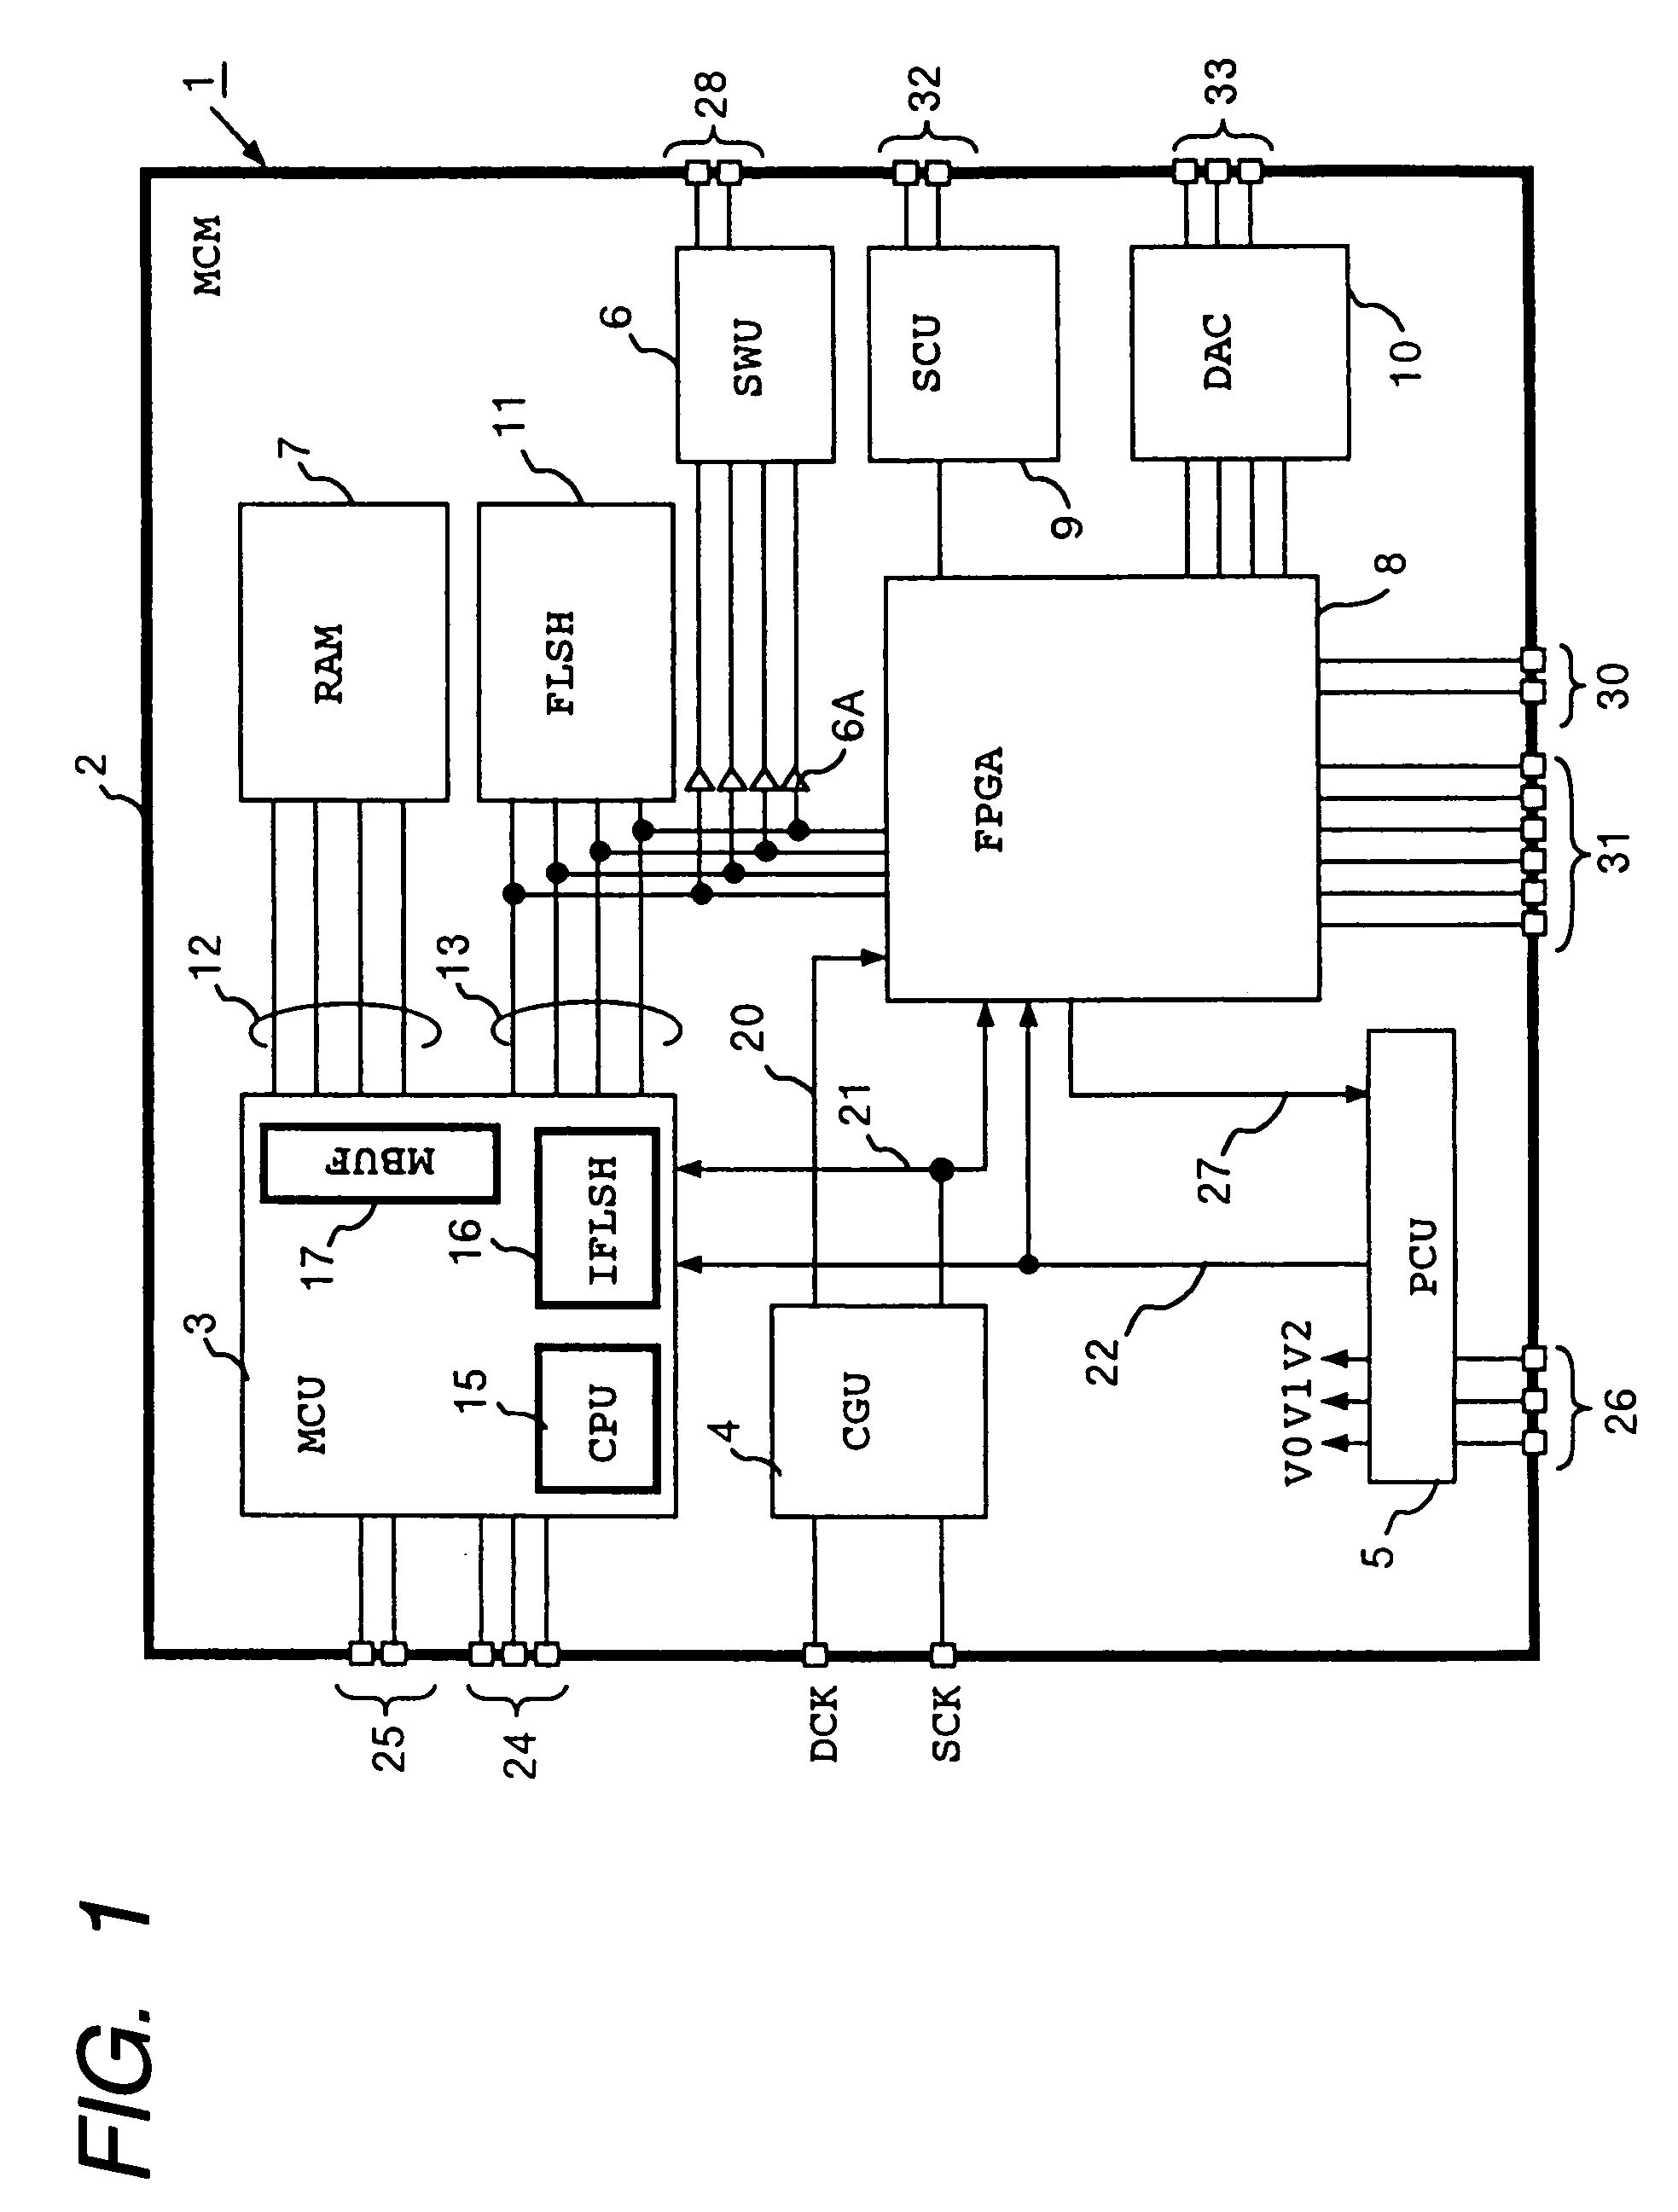 Electronic circuit device